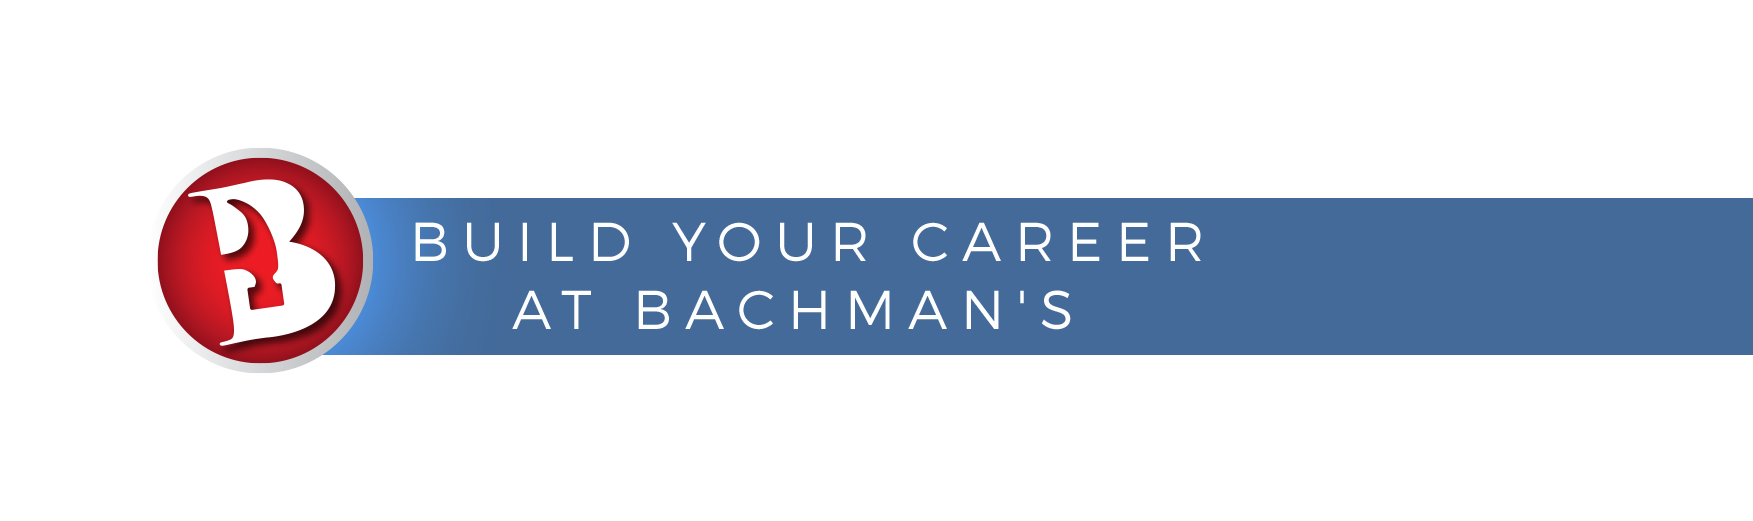 Bachman's Career Header Image